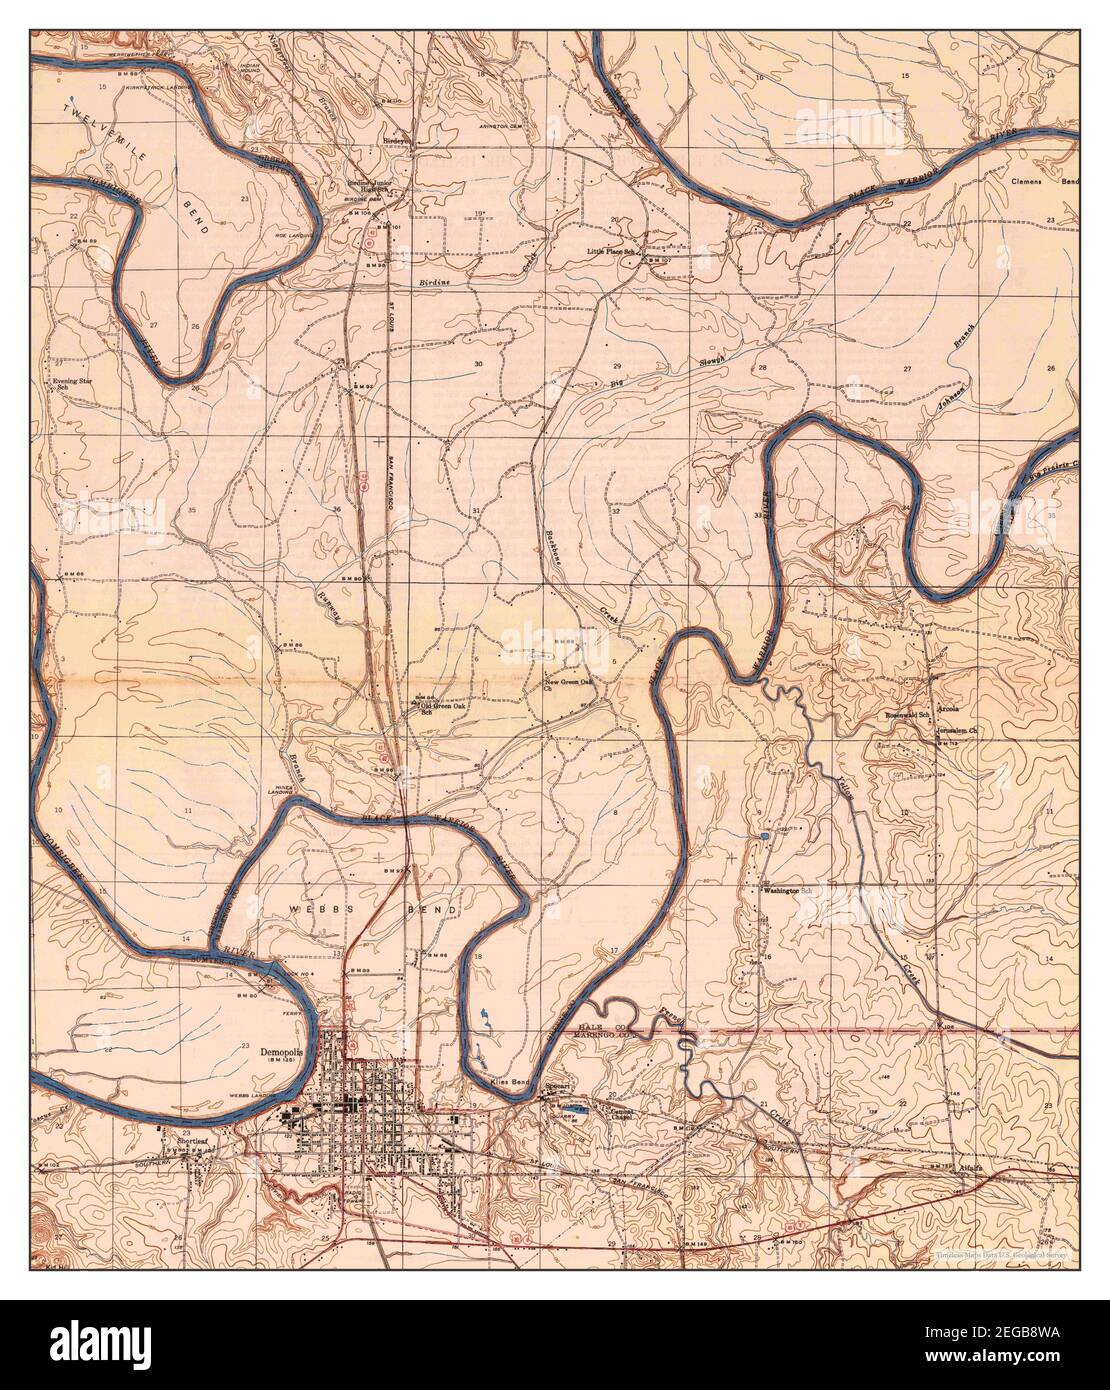 Demopolis, Alabama, map 1946, 1:24000, United States of America by Timeless Maps, data U.S. Geological Survey Stock Photo